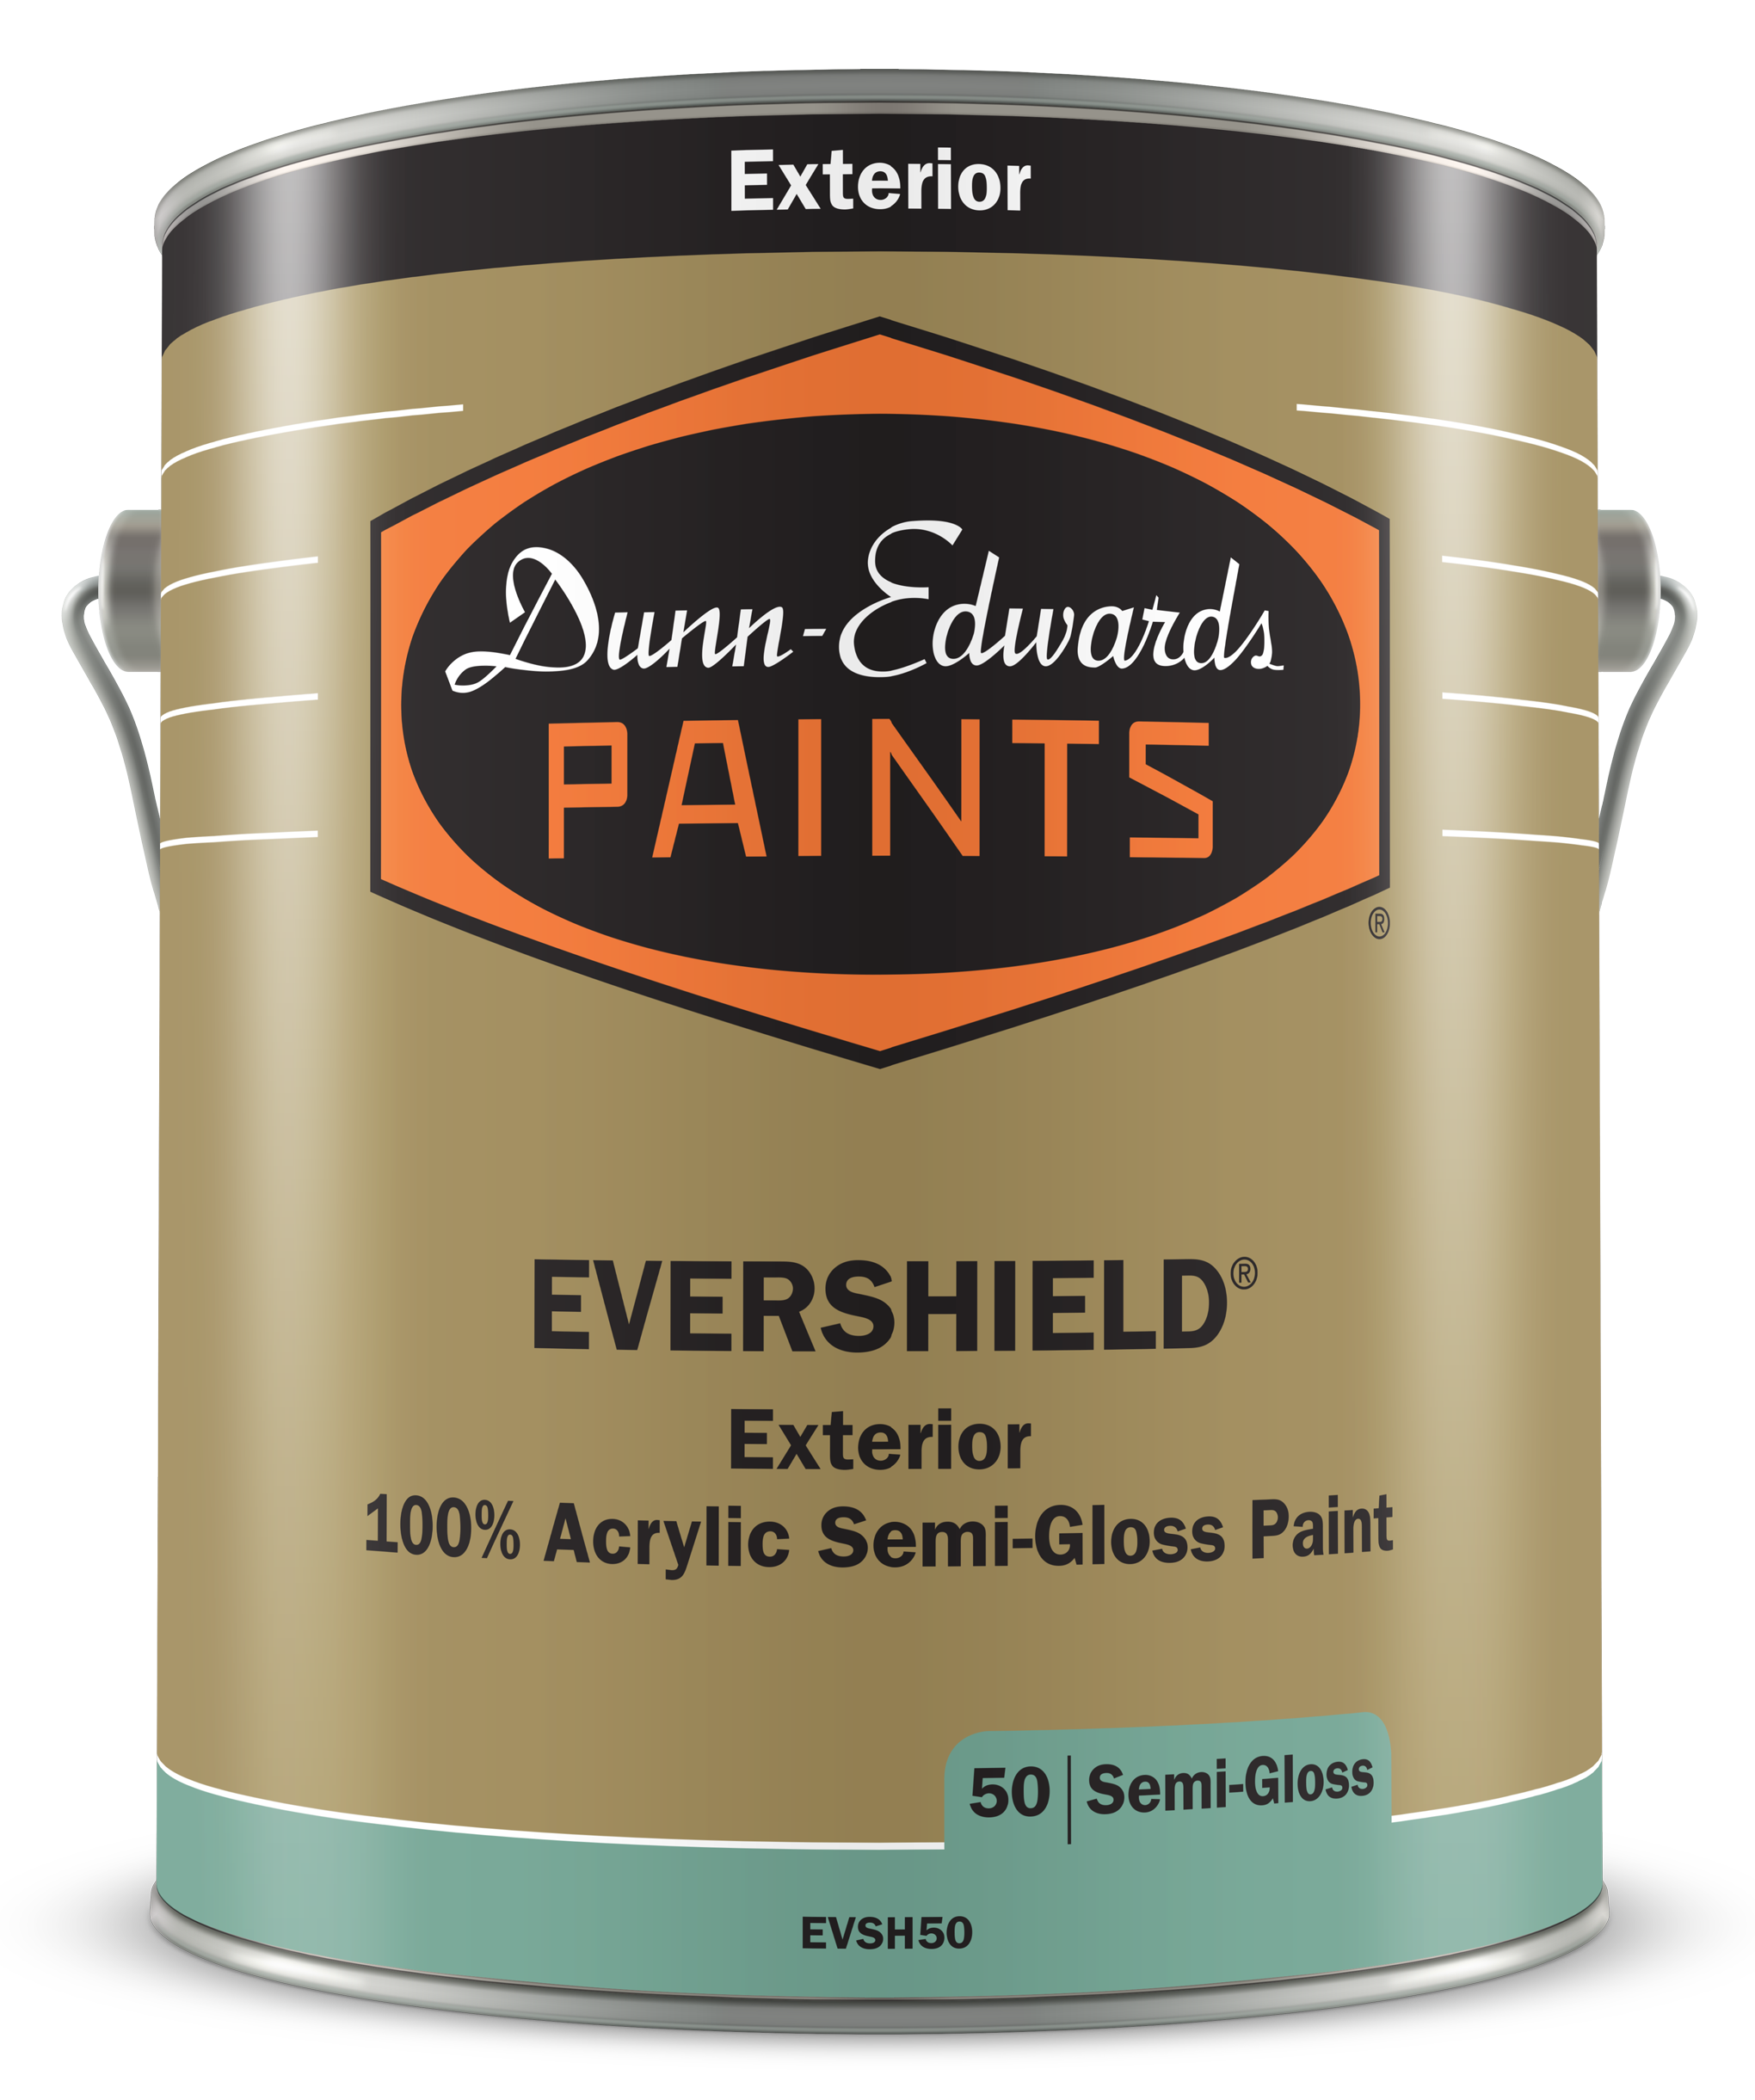 EVERSHIELD Exterior 100% Acrylic Semi-Gloss Paint Can